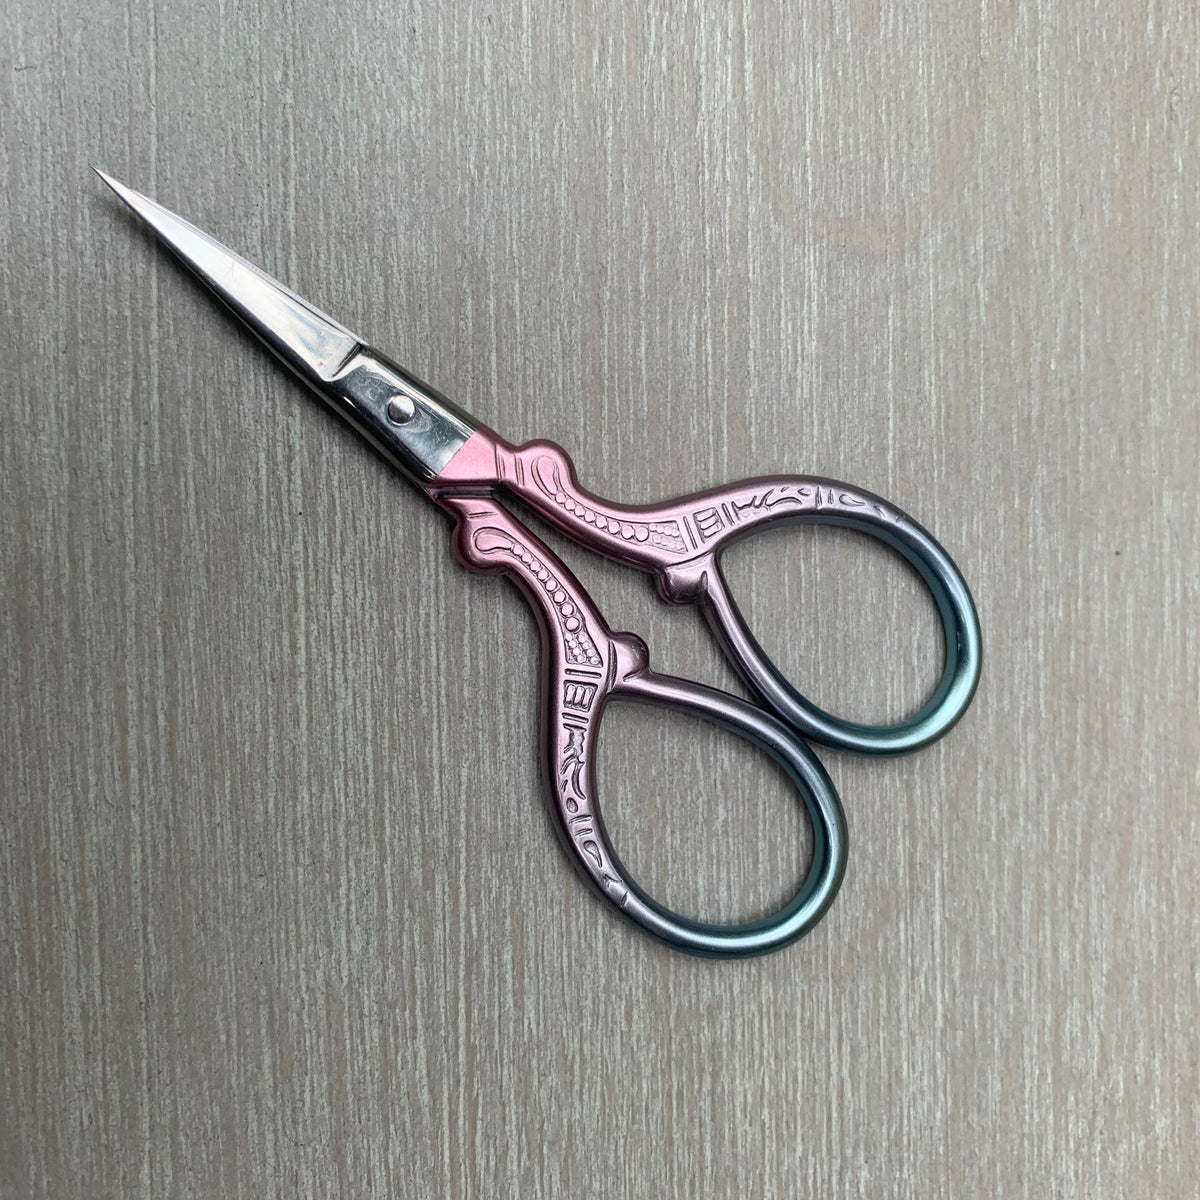 MakersElement Ombre Scissors ✂️